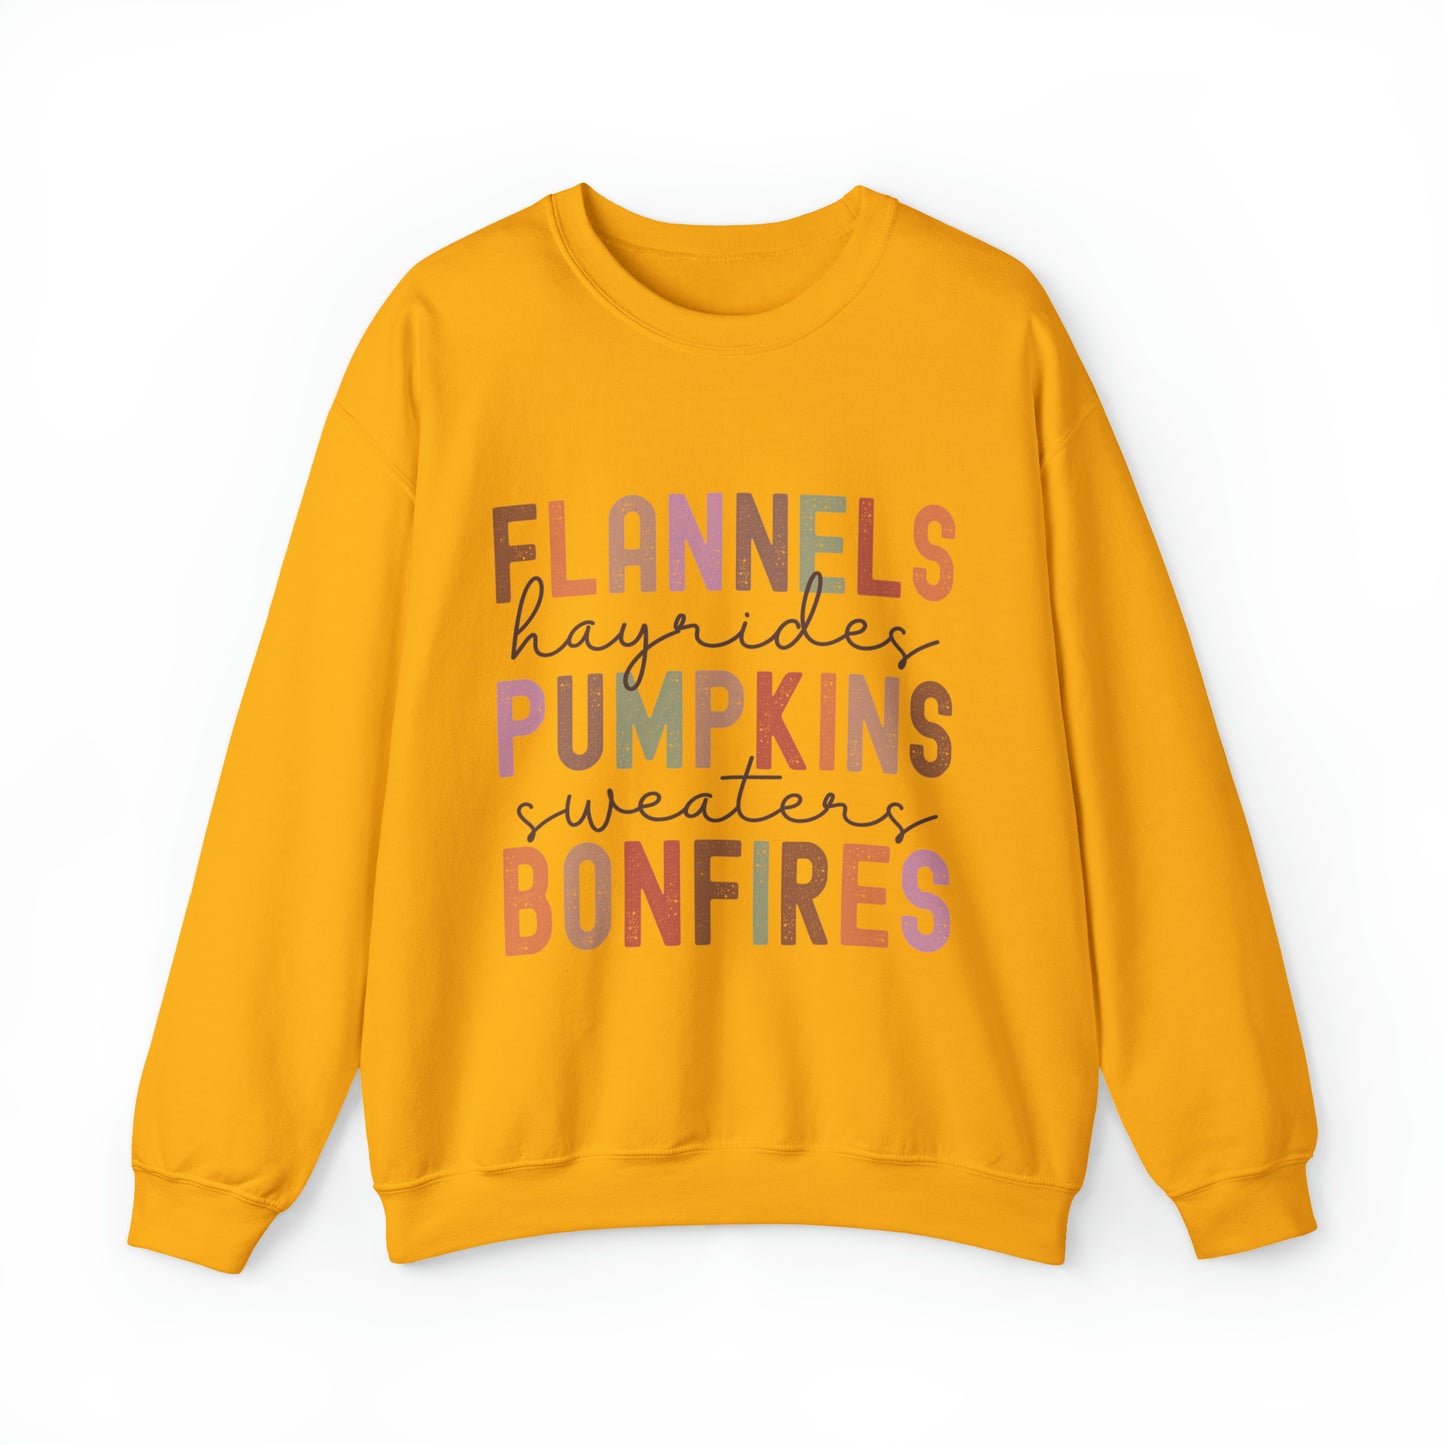 All The Fall Things Crewneck Sweatshirt